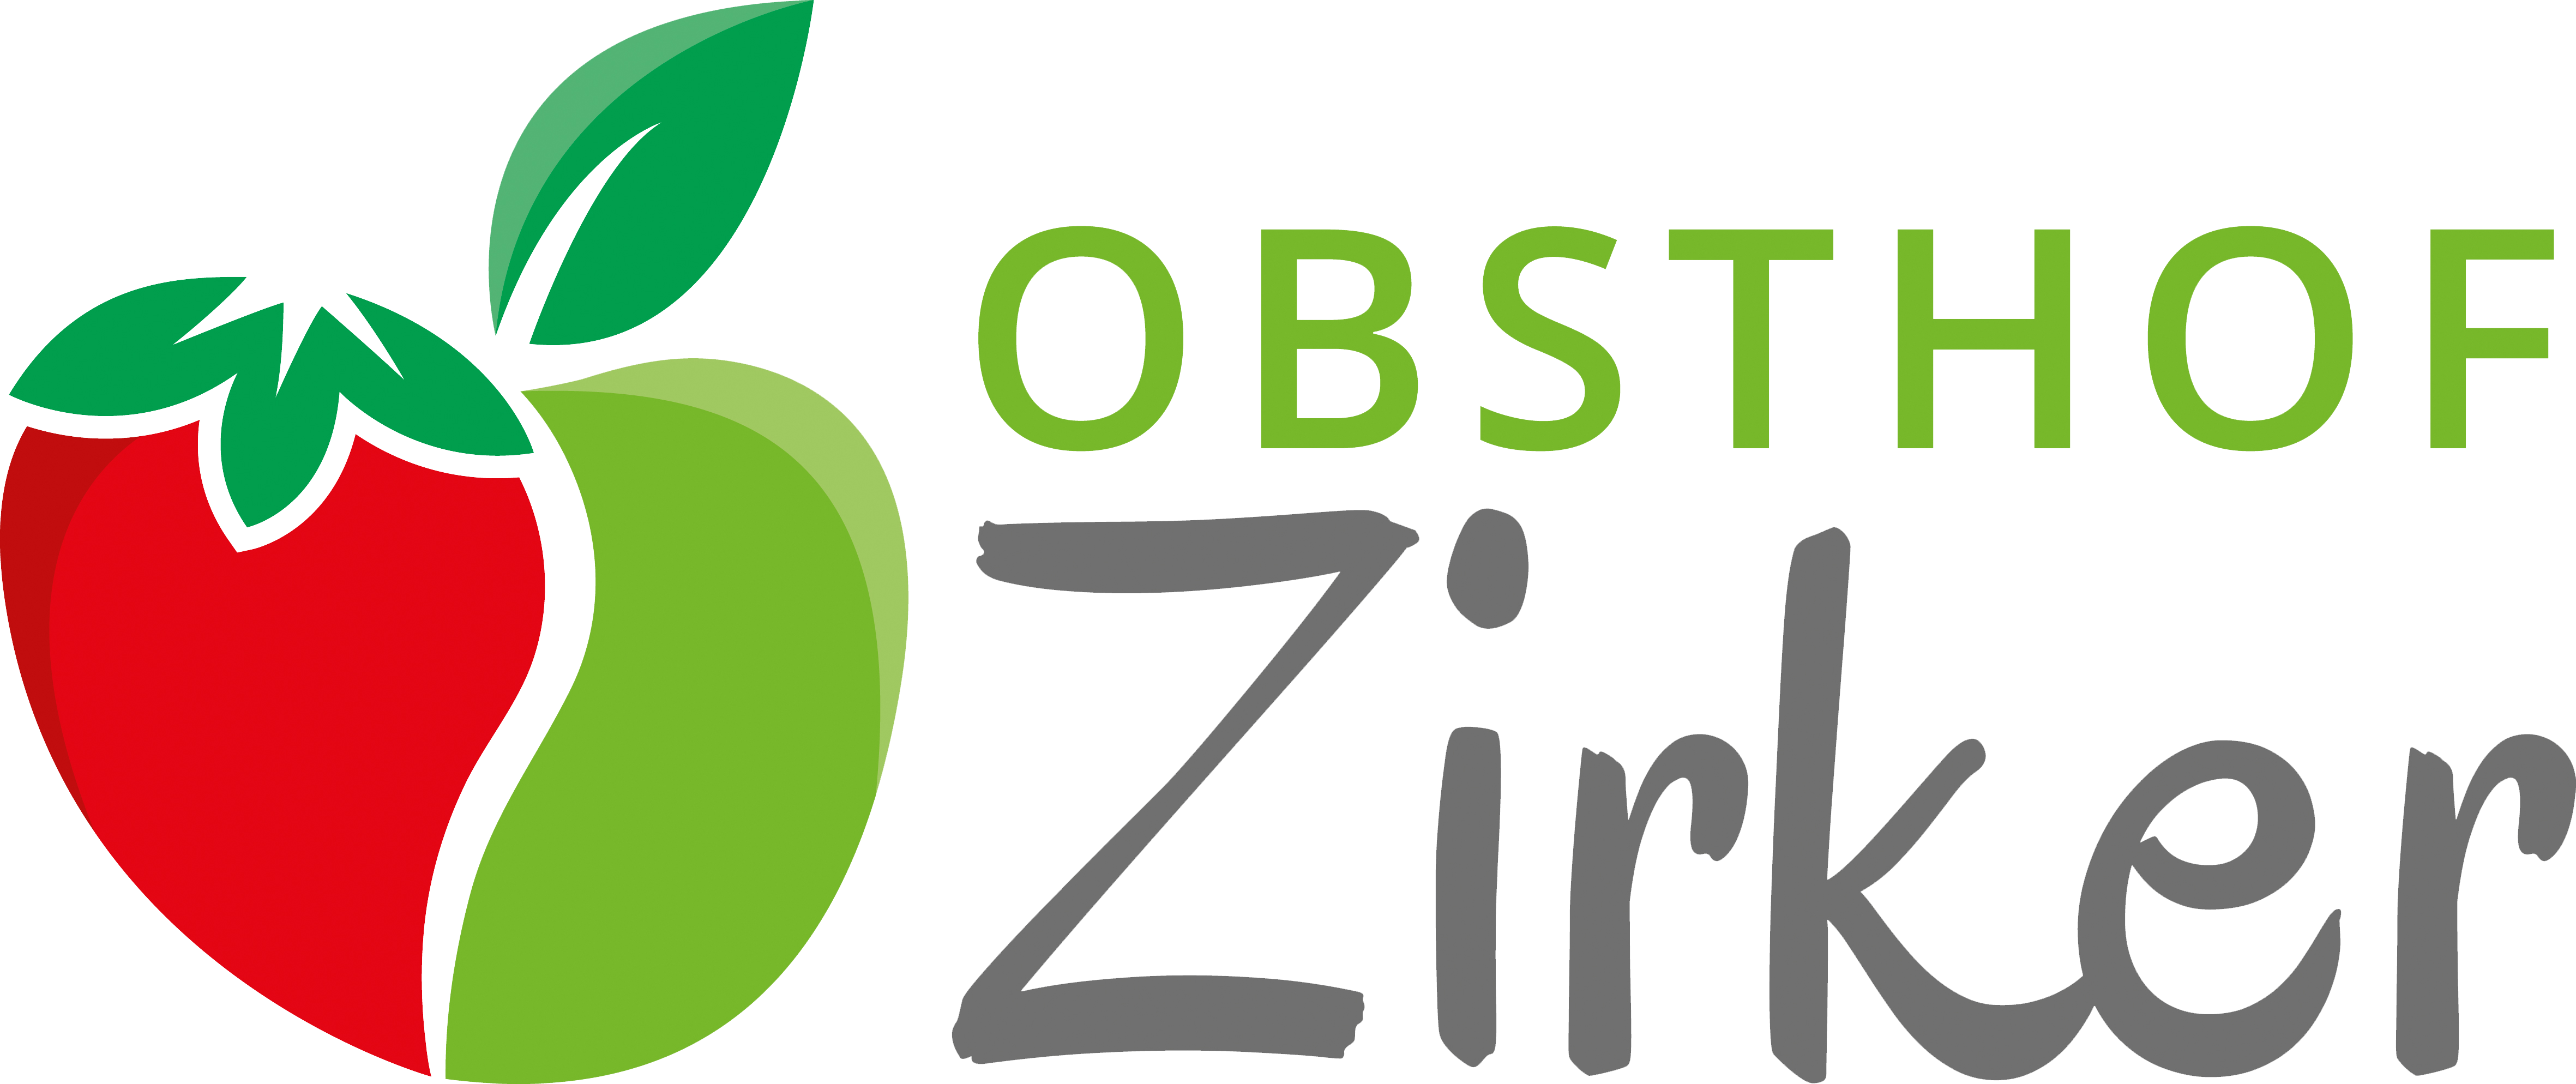 Obsthof Zirker KG